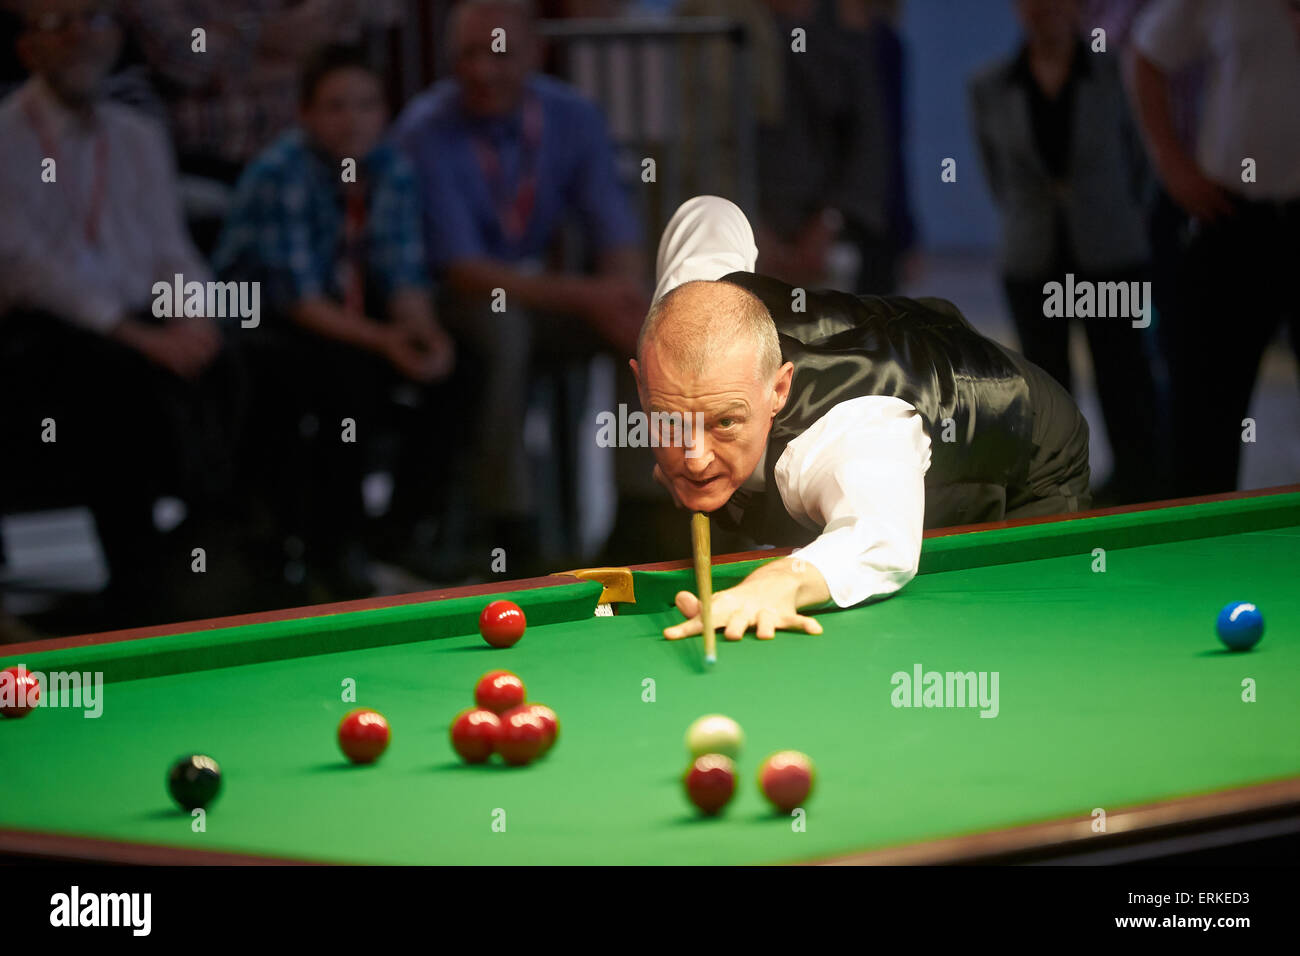 Snooker legend Steve Davis, exhibition match, Vallendar, Rhineland-Palatinate, Germany Stock Photo